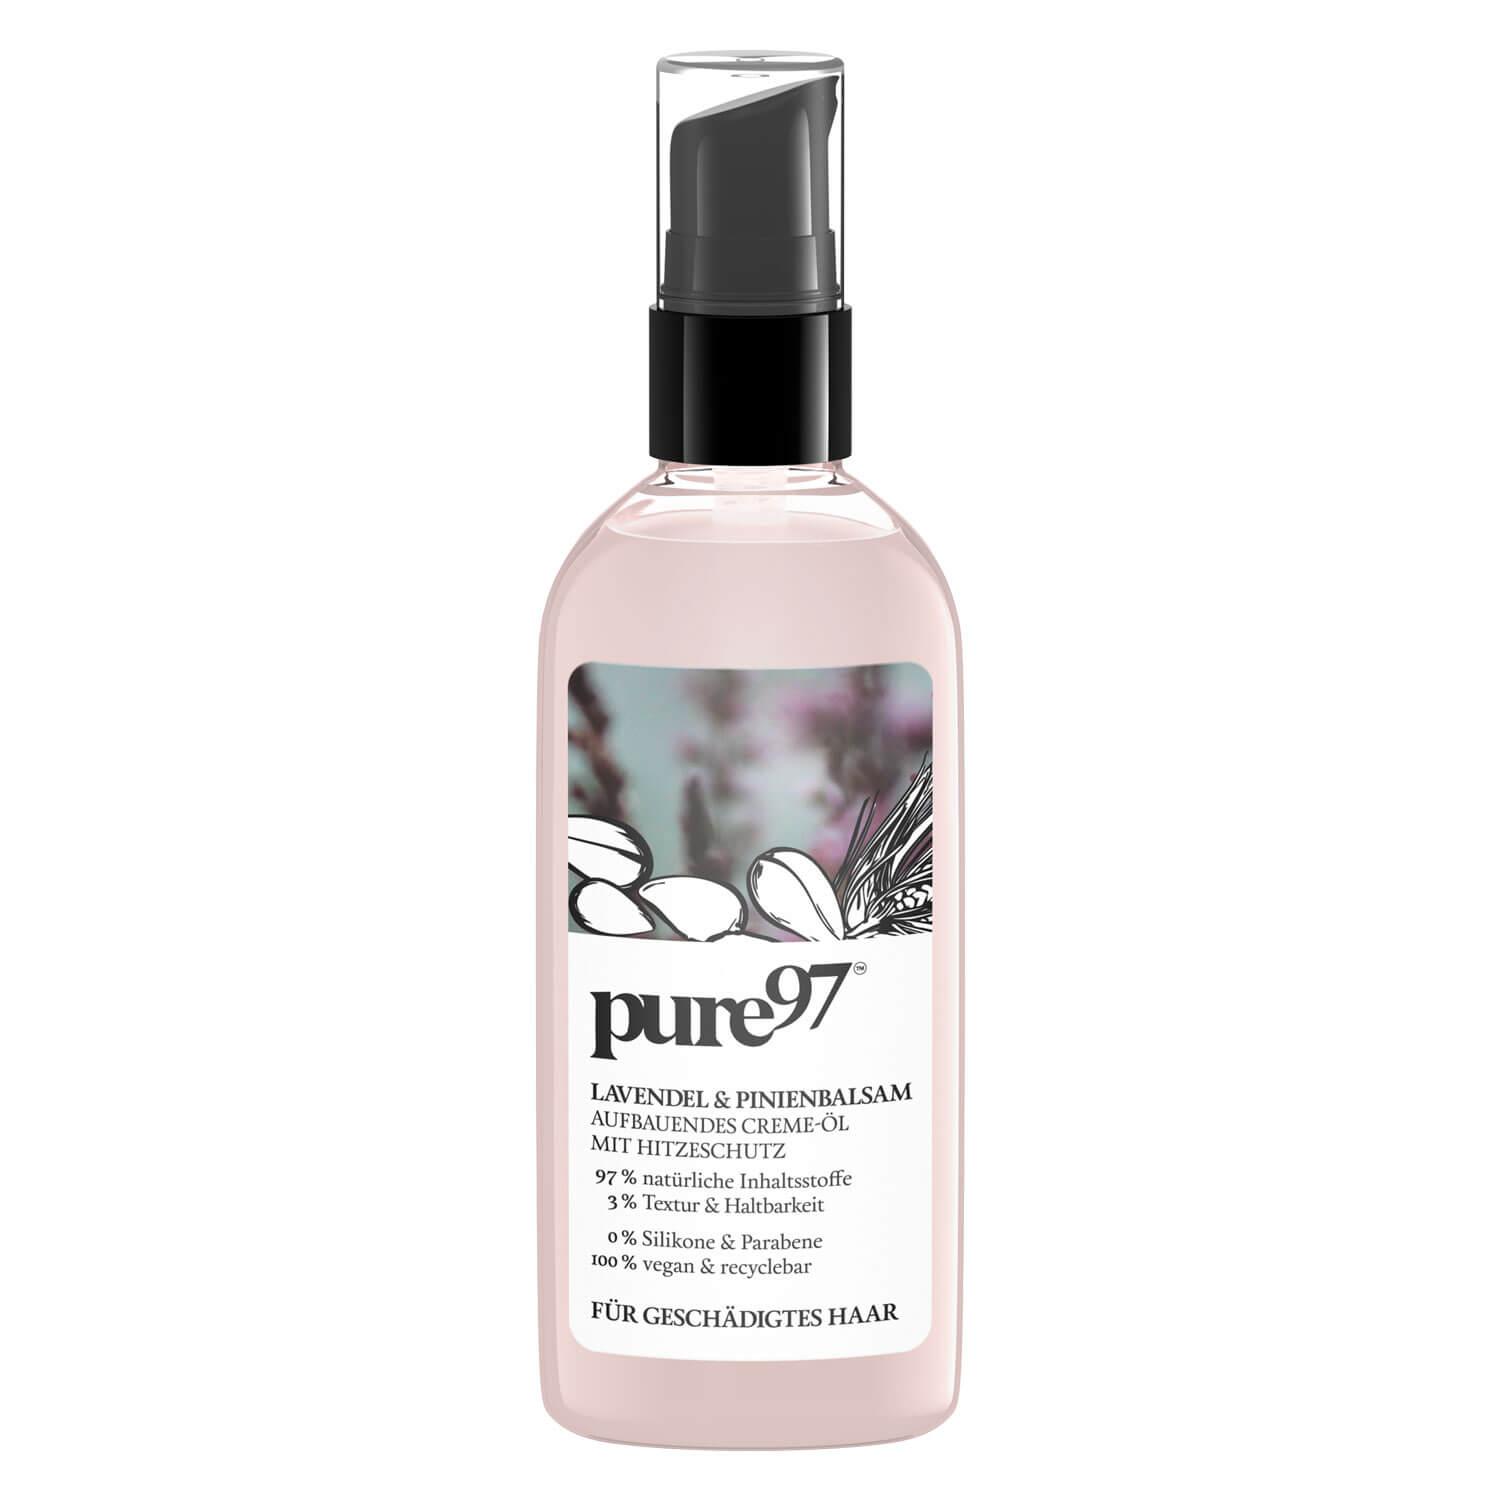 pure97 - Lavendel & Pinienbalsam Creme-Öl